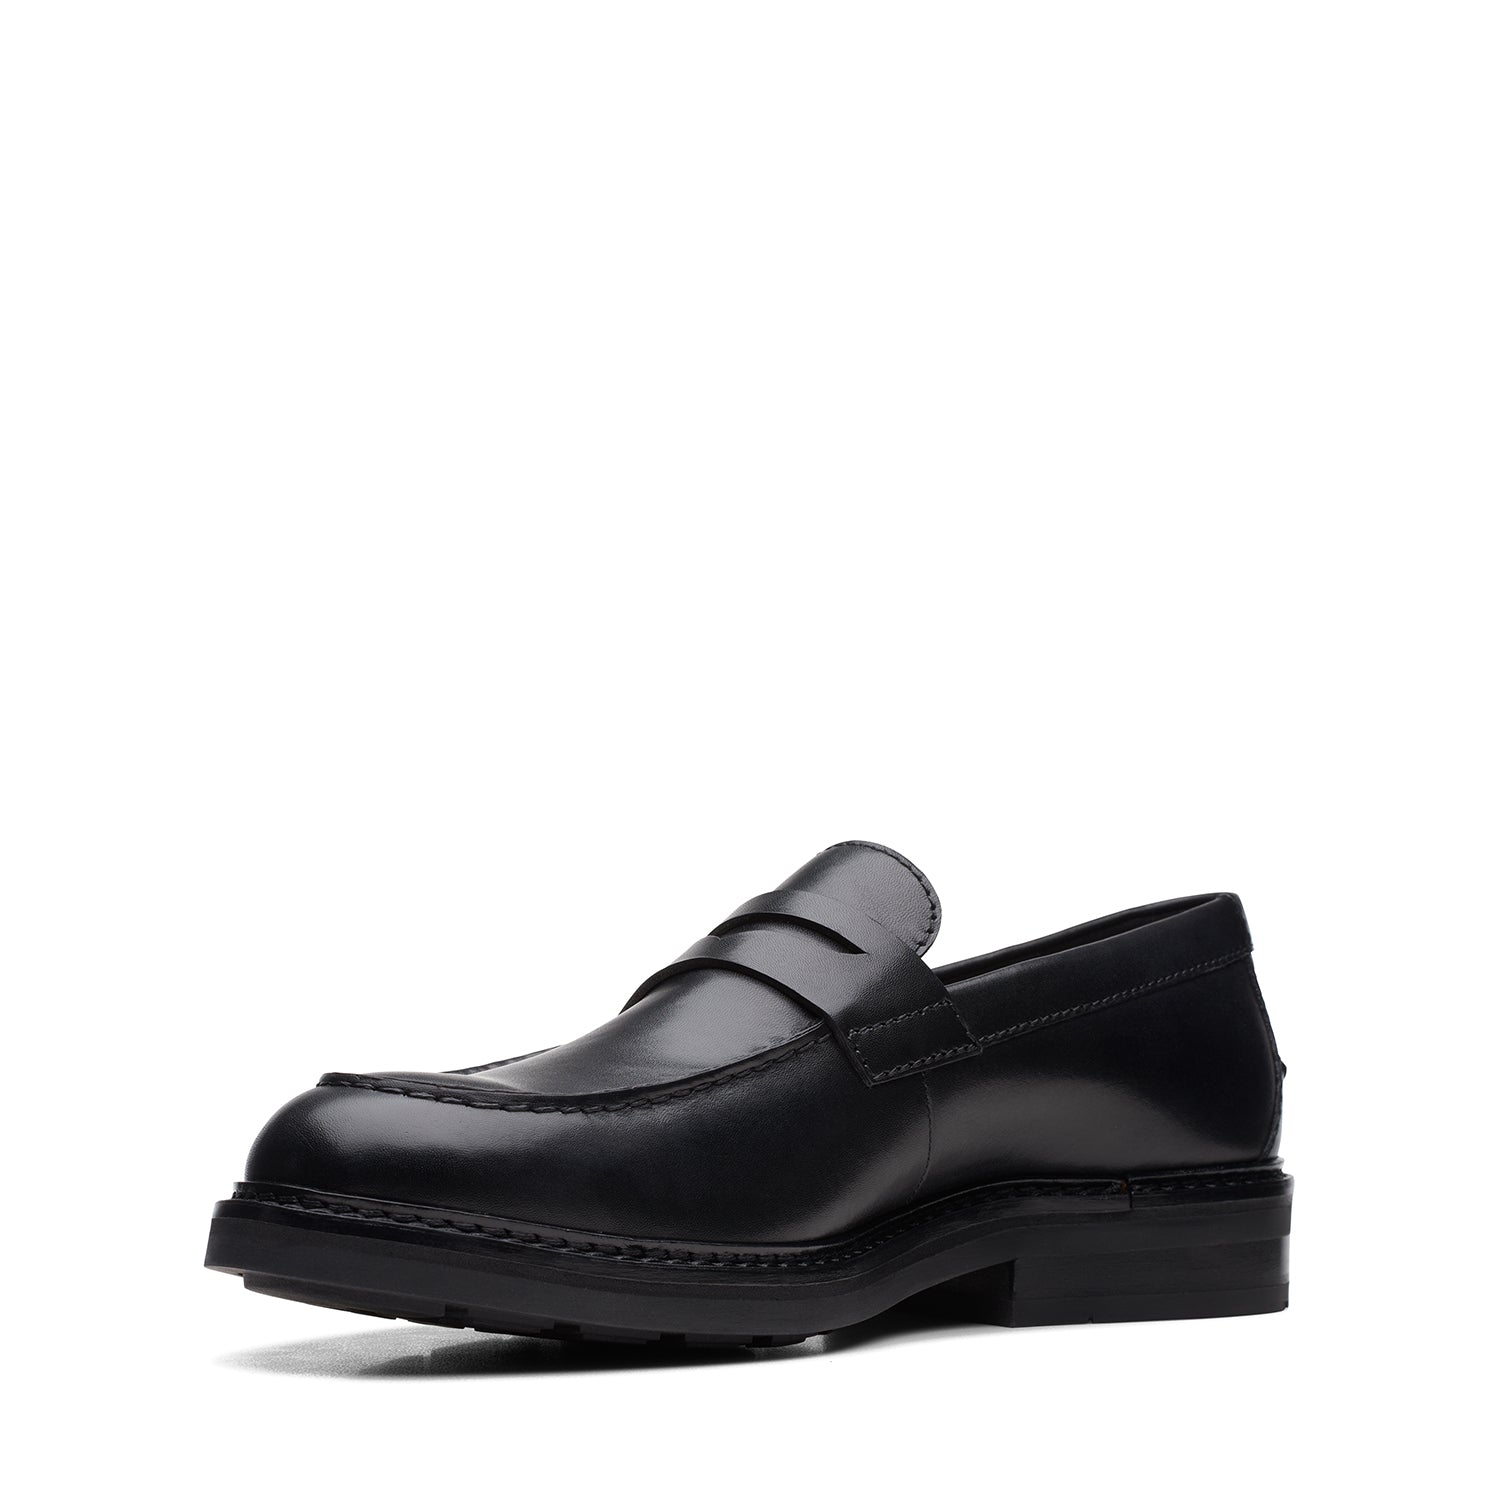 Clarks Craftevan Ease Shoes - Black - 261691397 - G Width (Standard Fit)